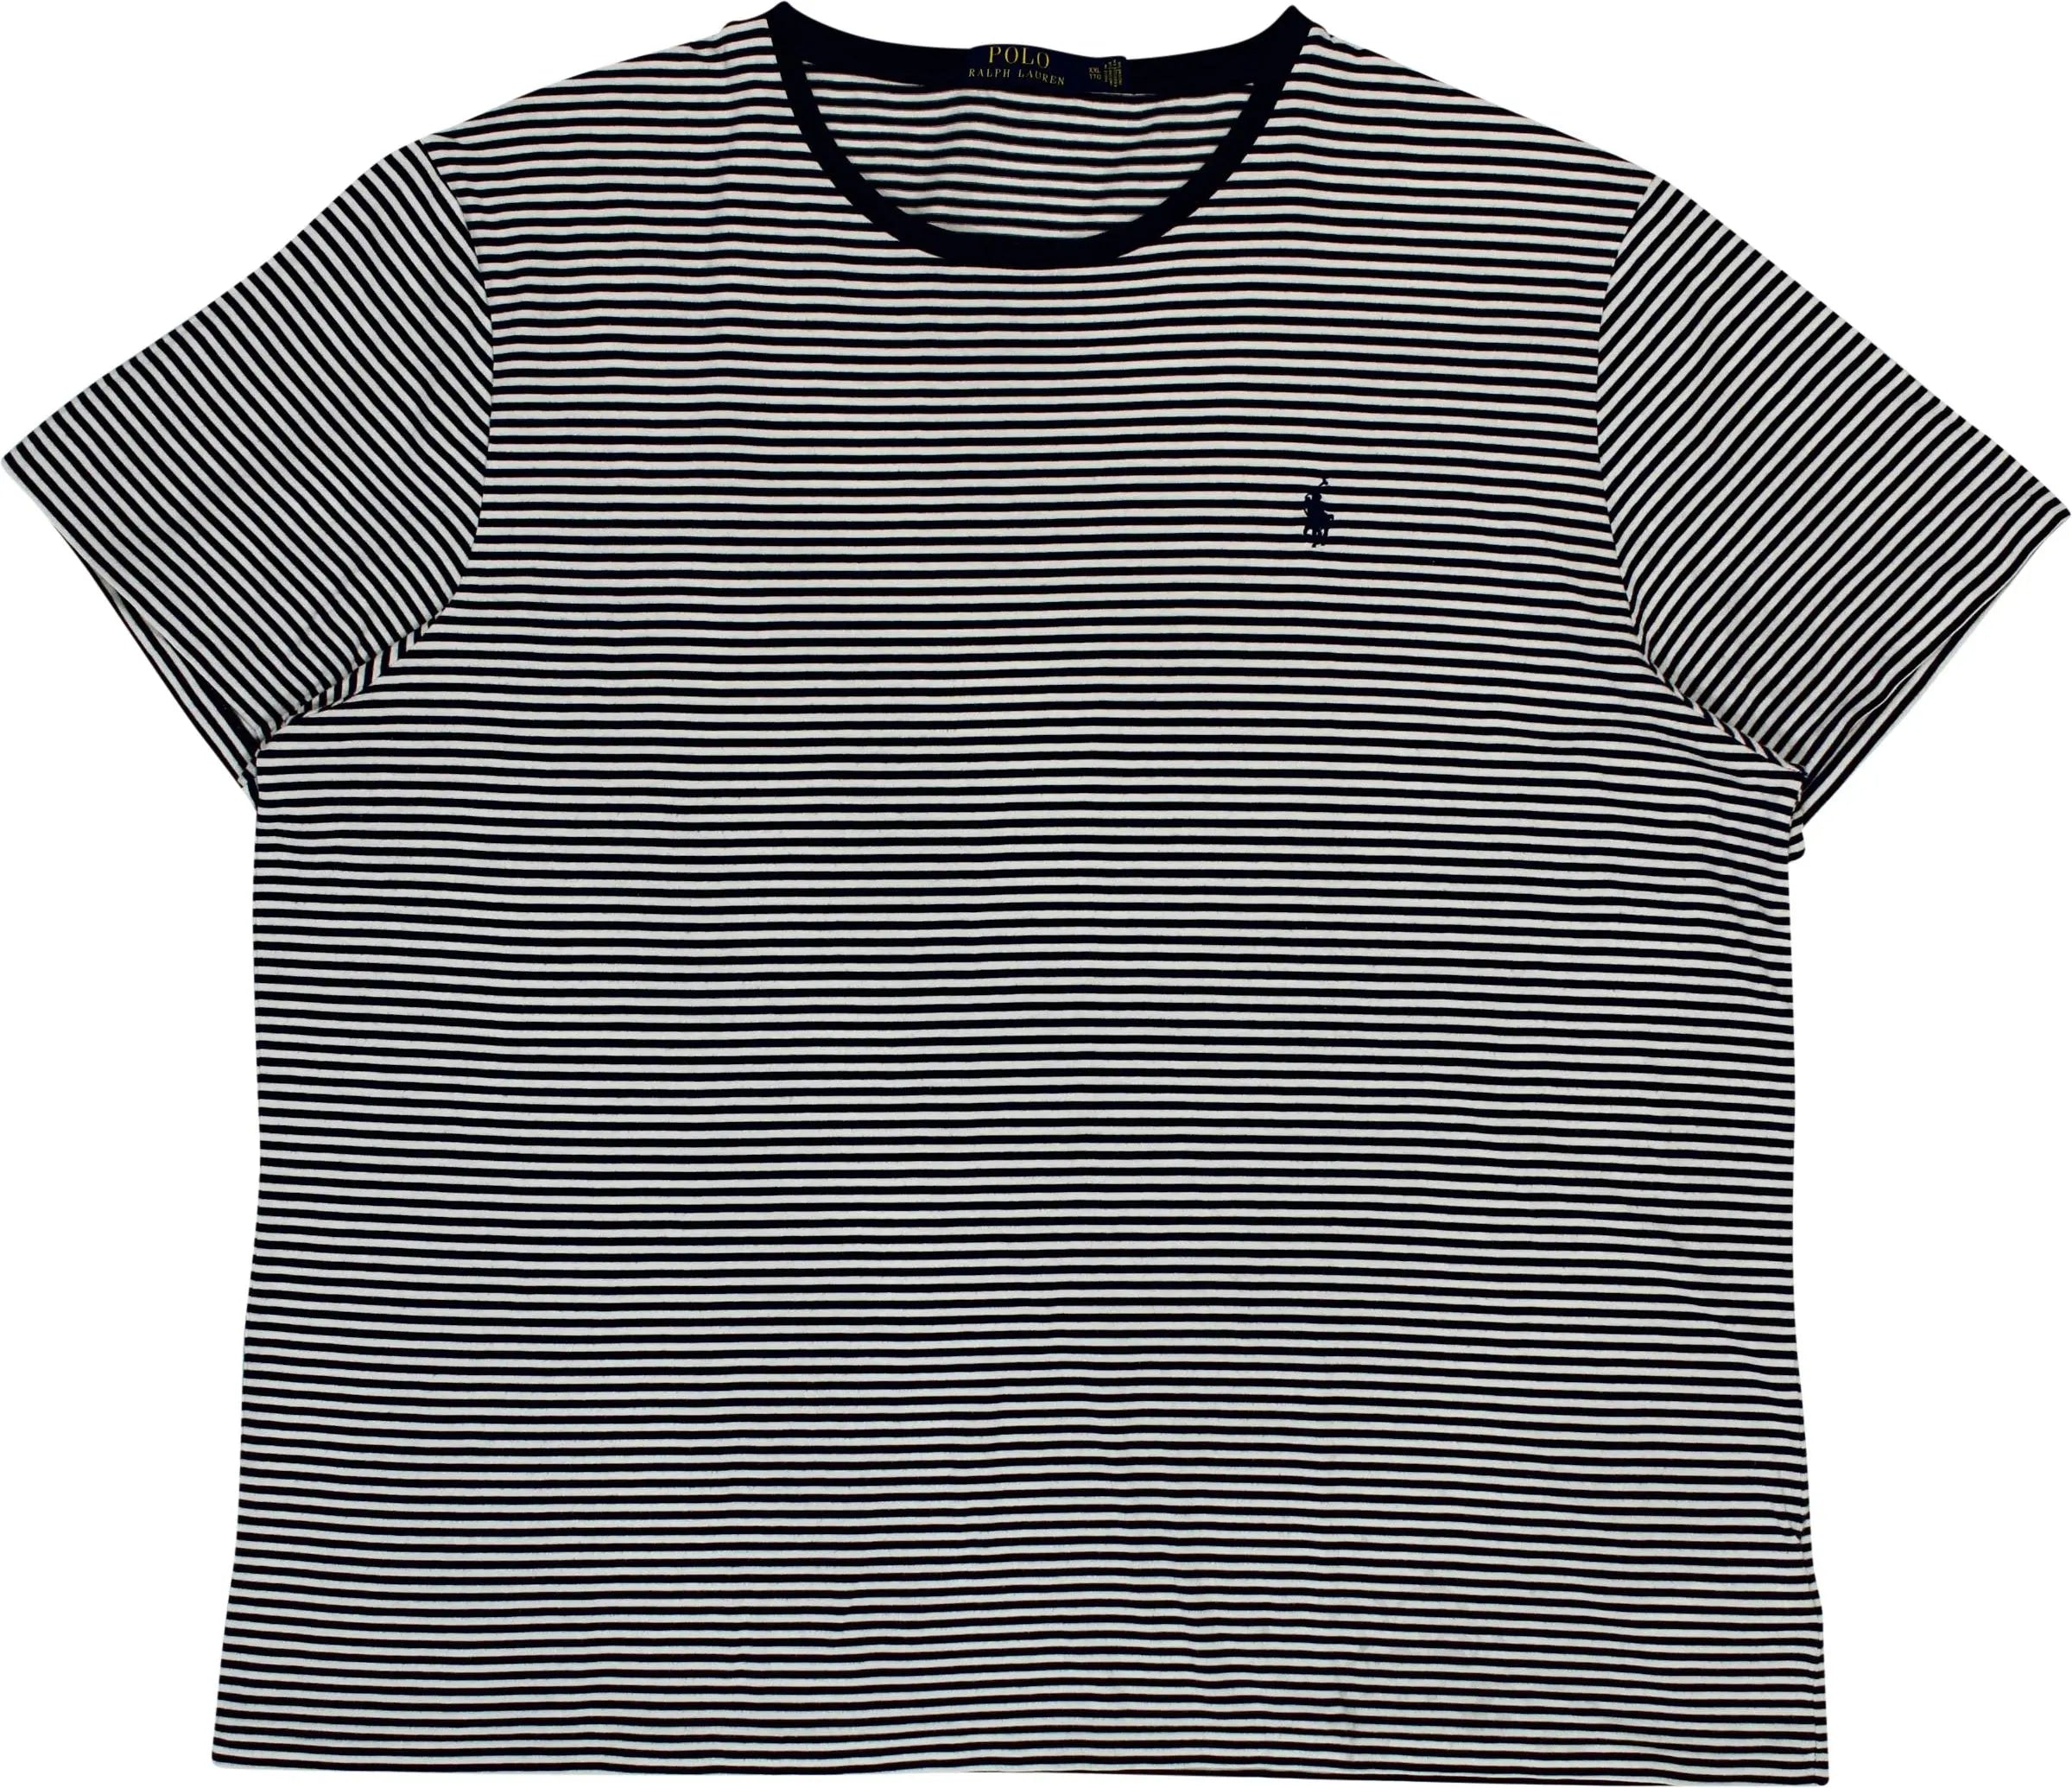 Ralph Lauren - Striped T-Shirt by Ralph Lauren- ThriftTale.com - Vintage and second handclothing